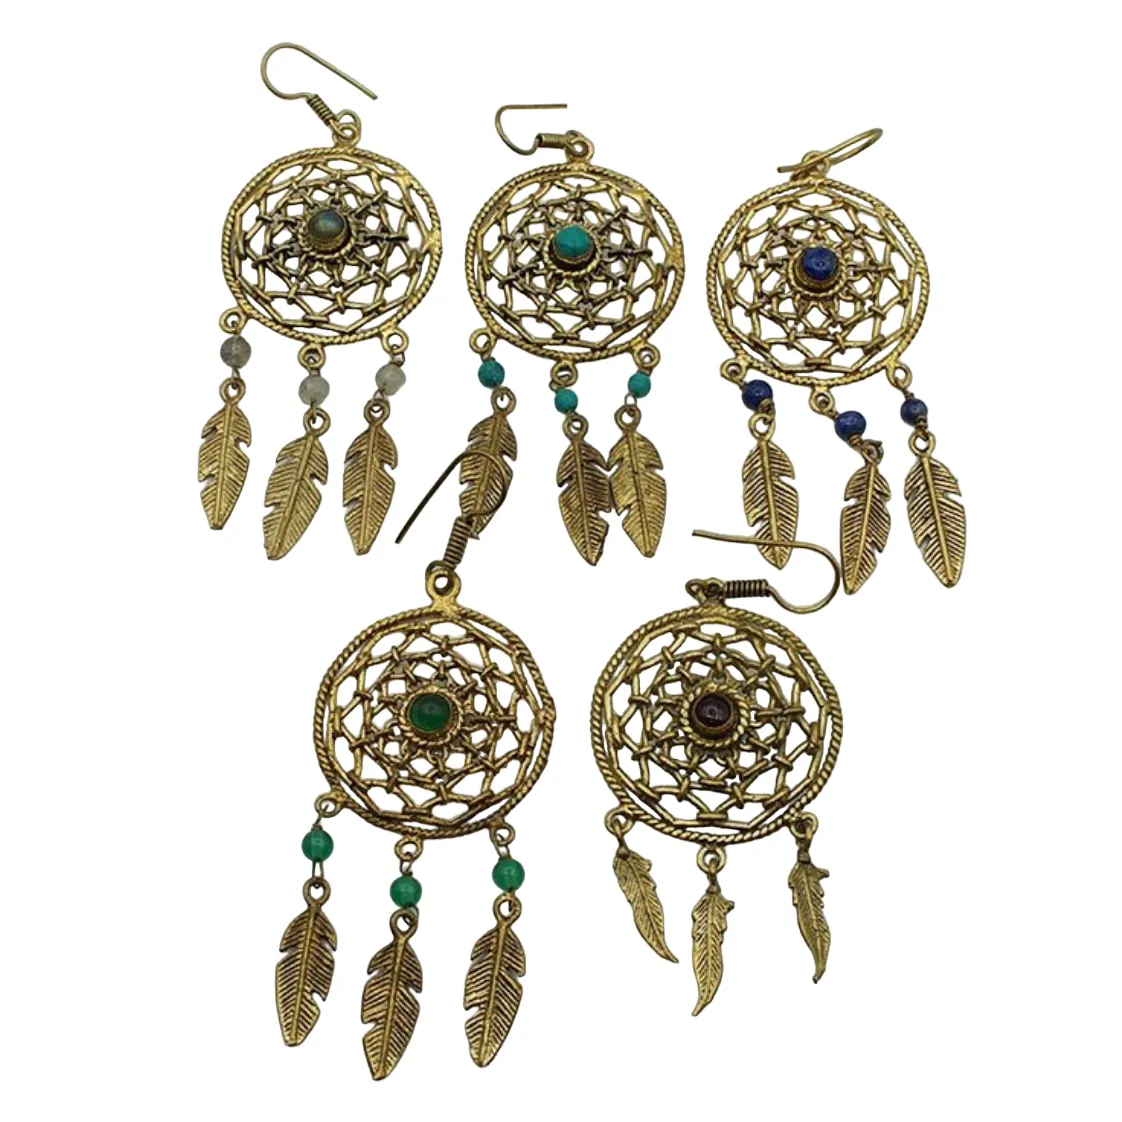 High quality handmade earrings with feathers for women beautiful fashionable big earrings handmade jewelry